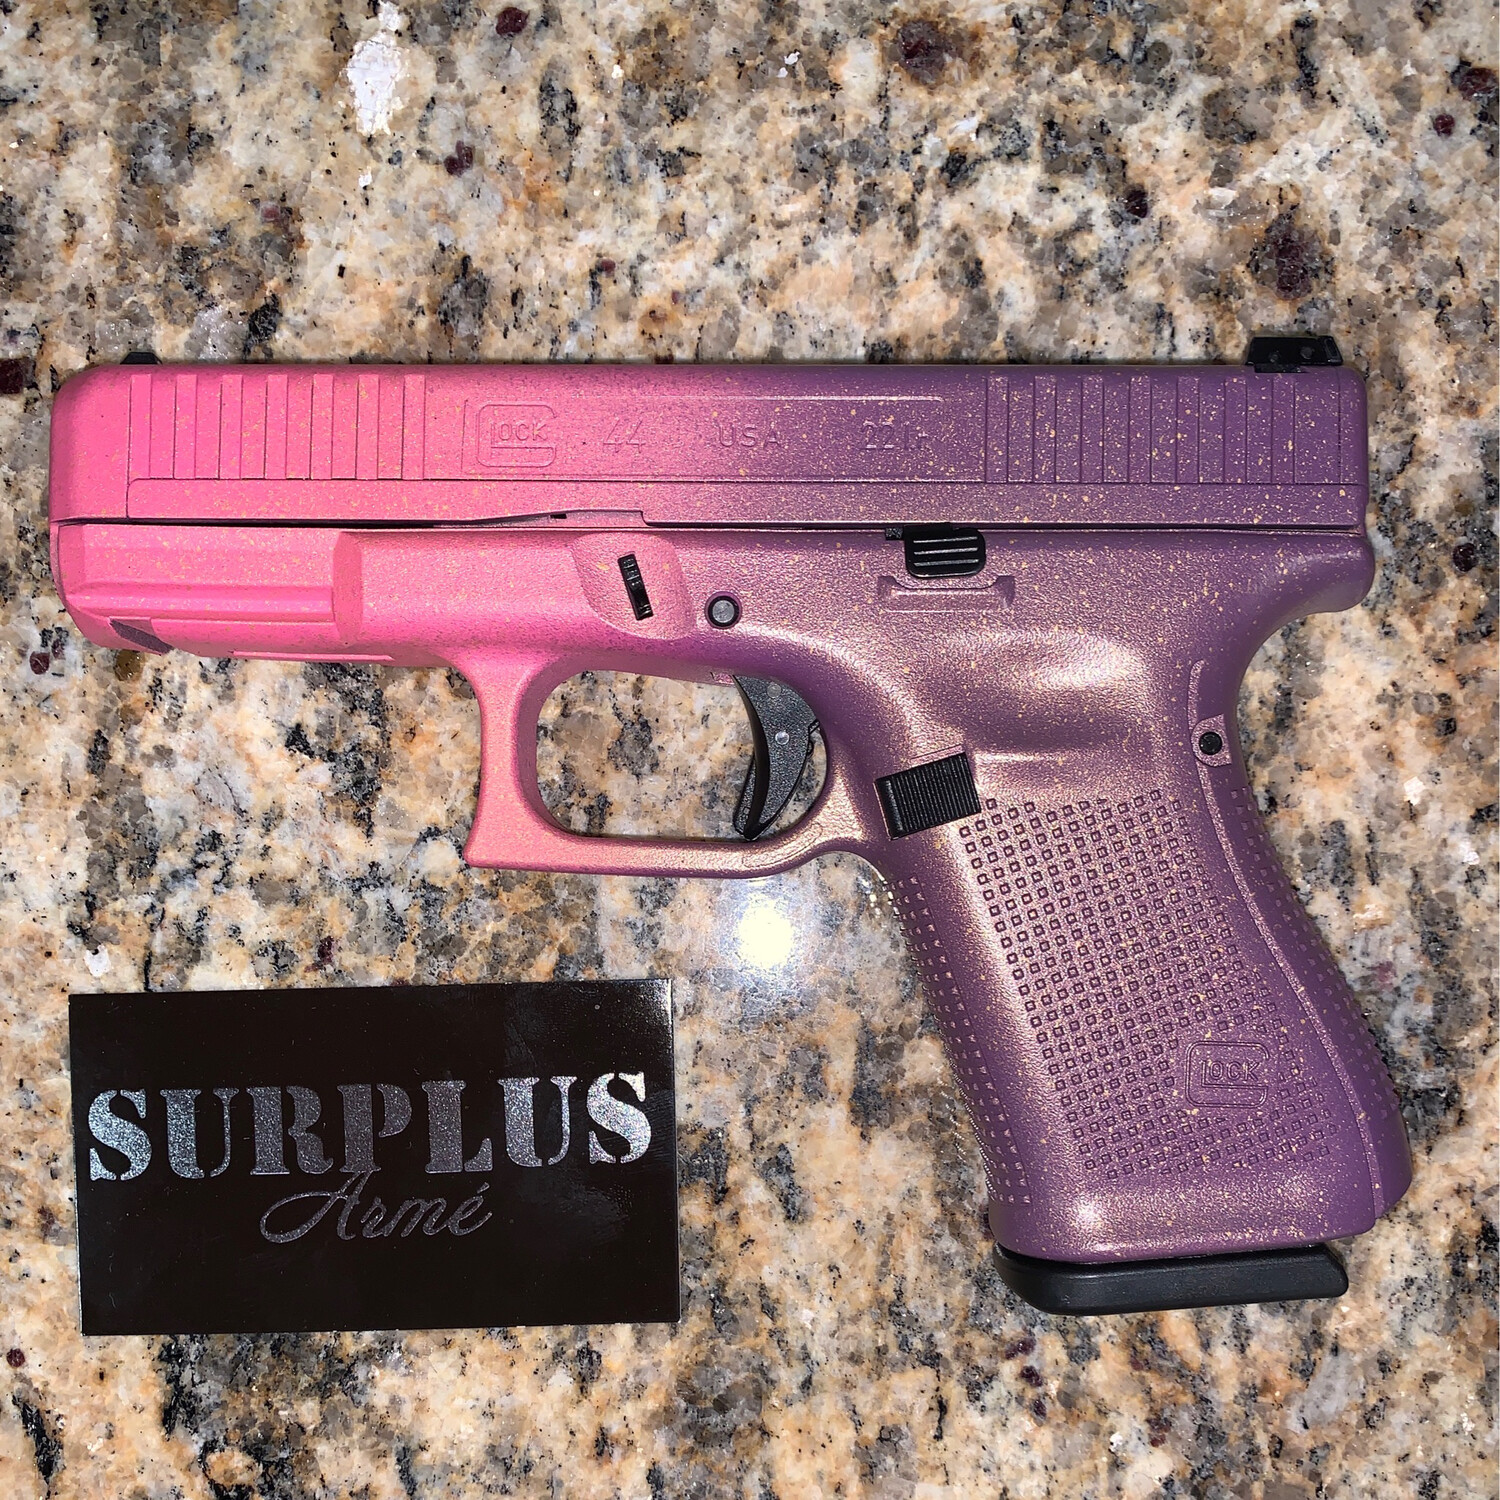 Glock G44 (Cotton Candy) Surplus Arme Customs